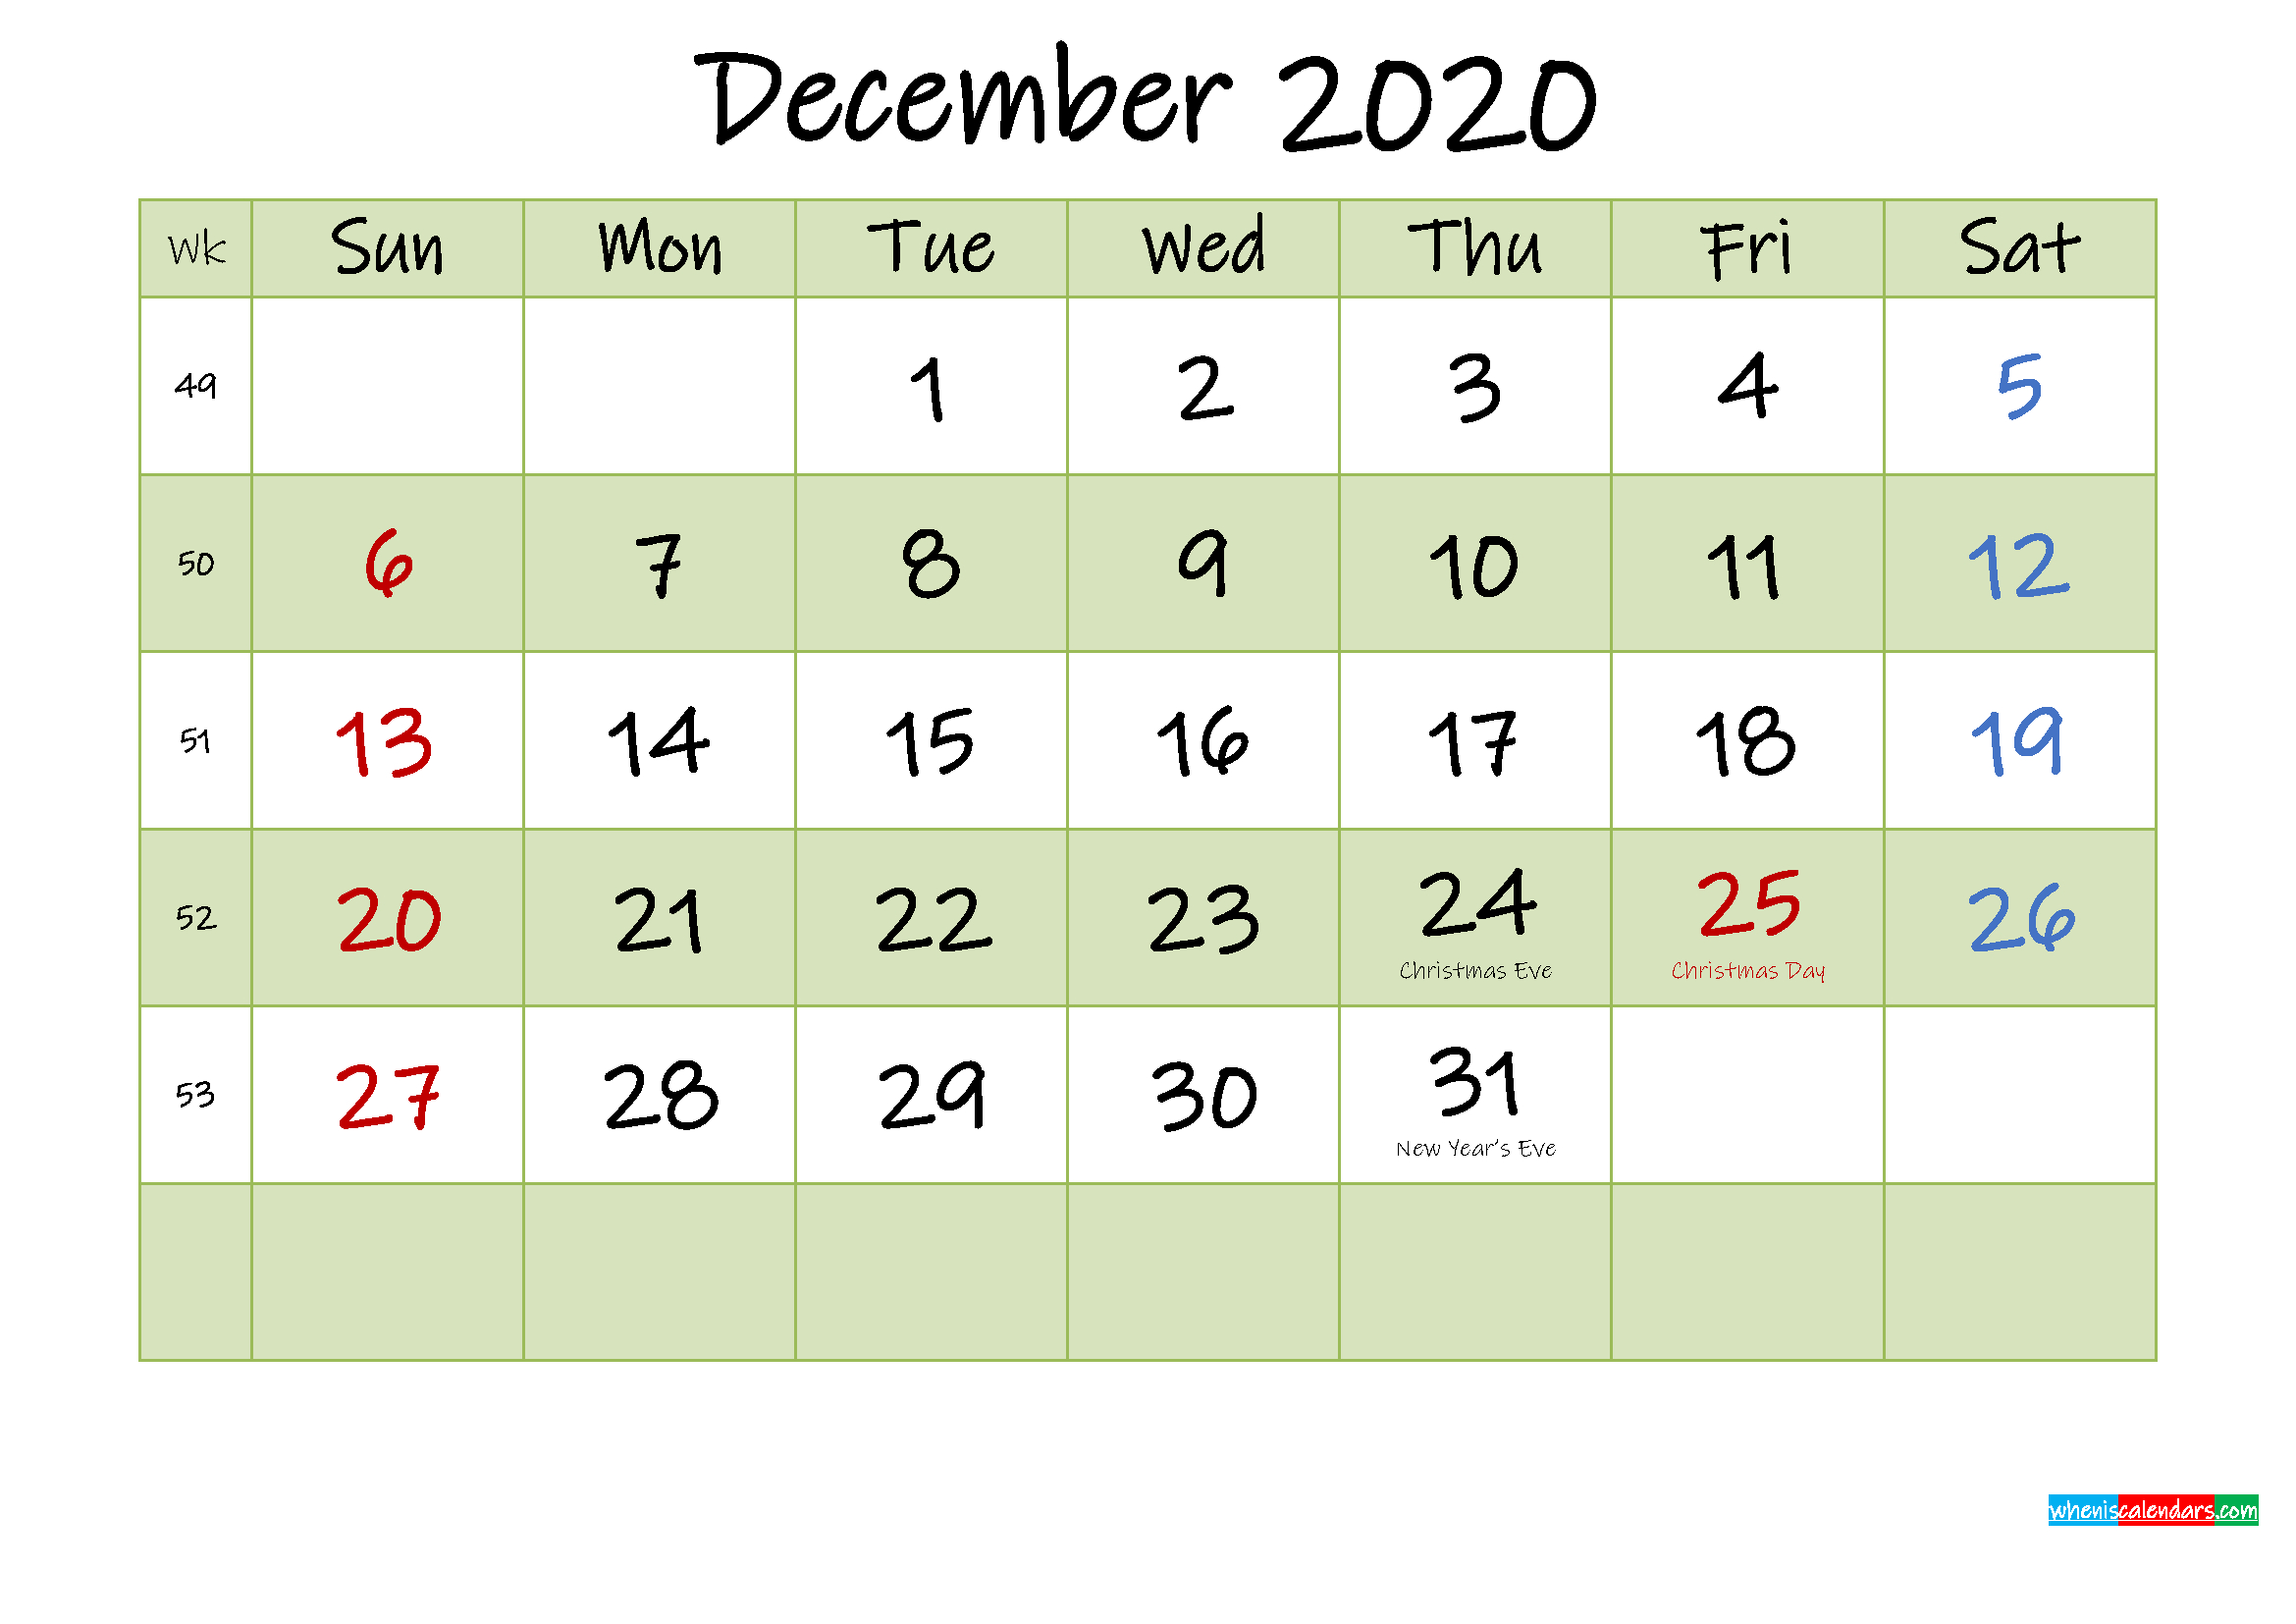 December 2020 Calendar With Holidays Printable - Template No.ink20M456-2020 Calendar 2022 Printable With Holidays